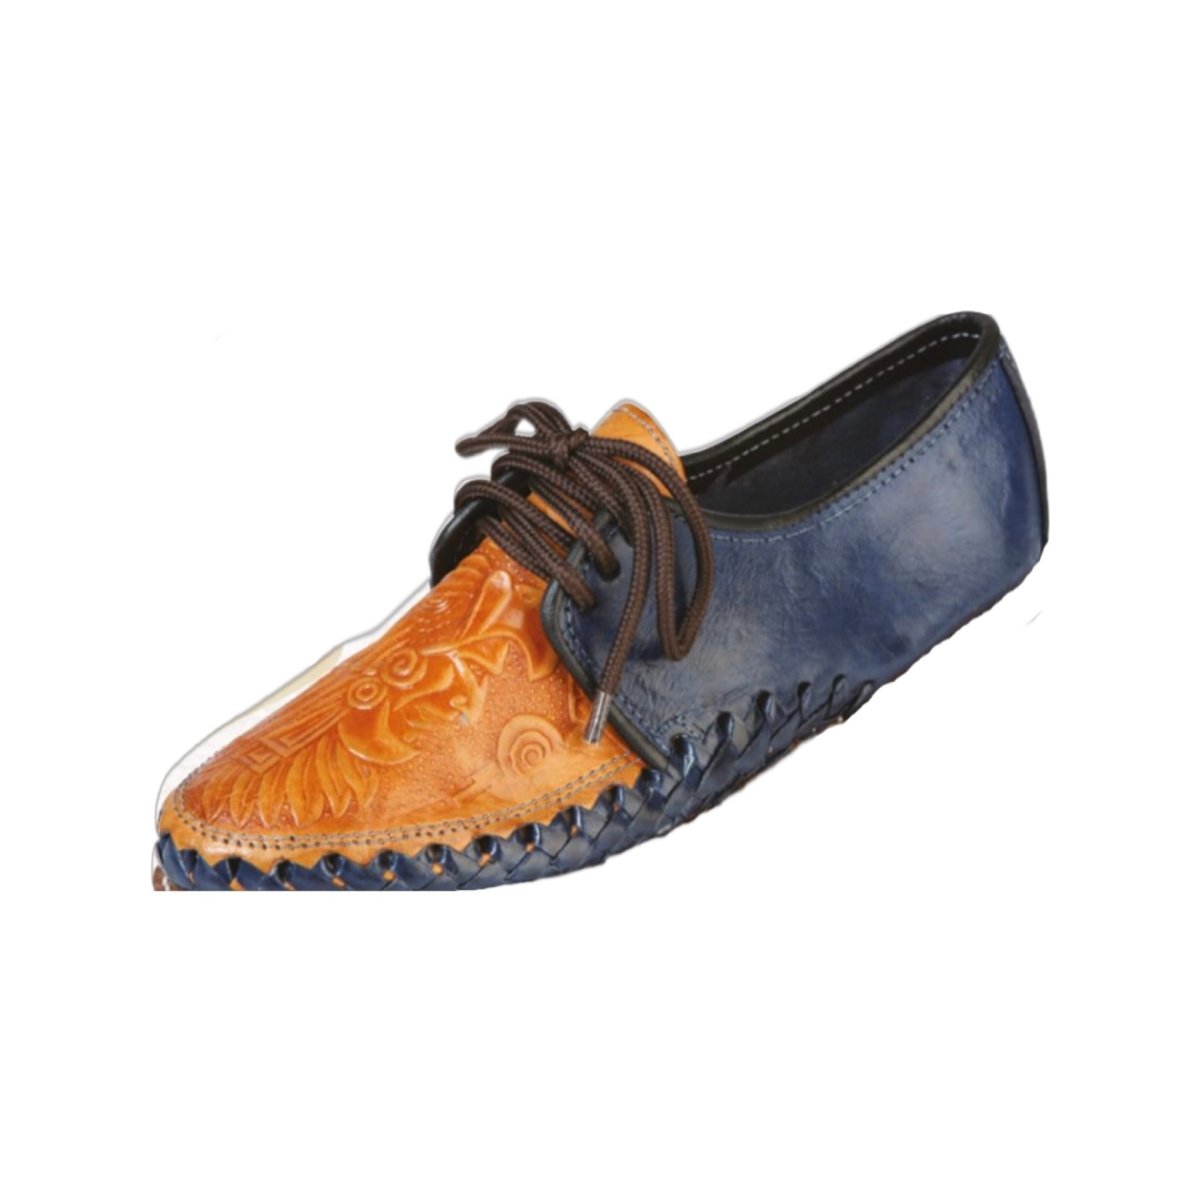 Zapato Artesanal de Hombre - CharroAzteca.com